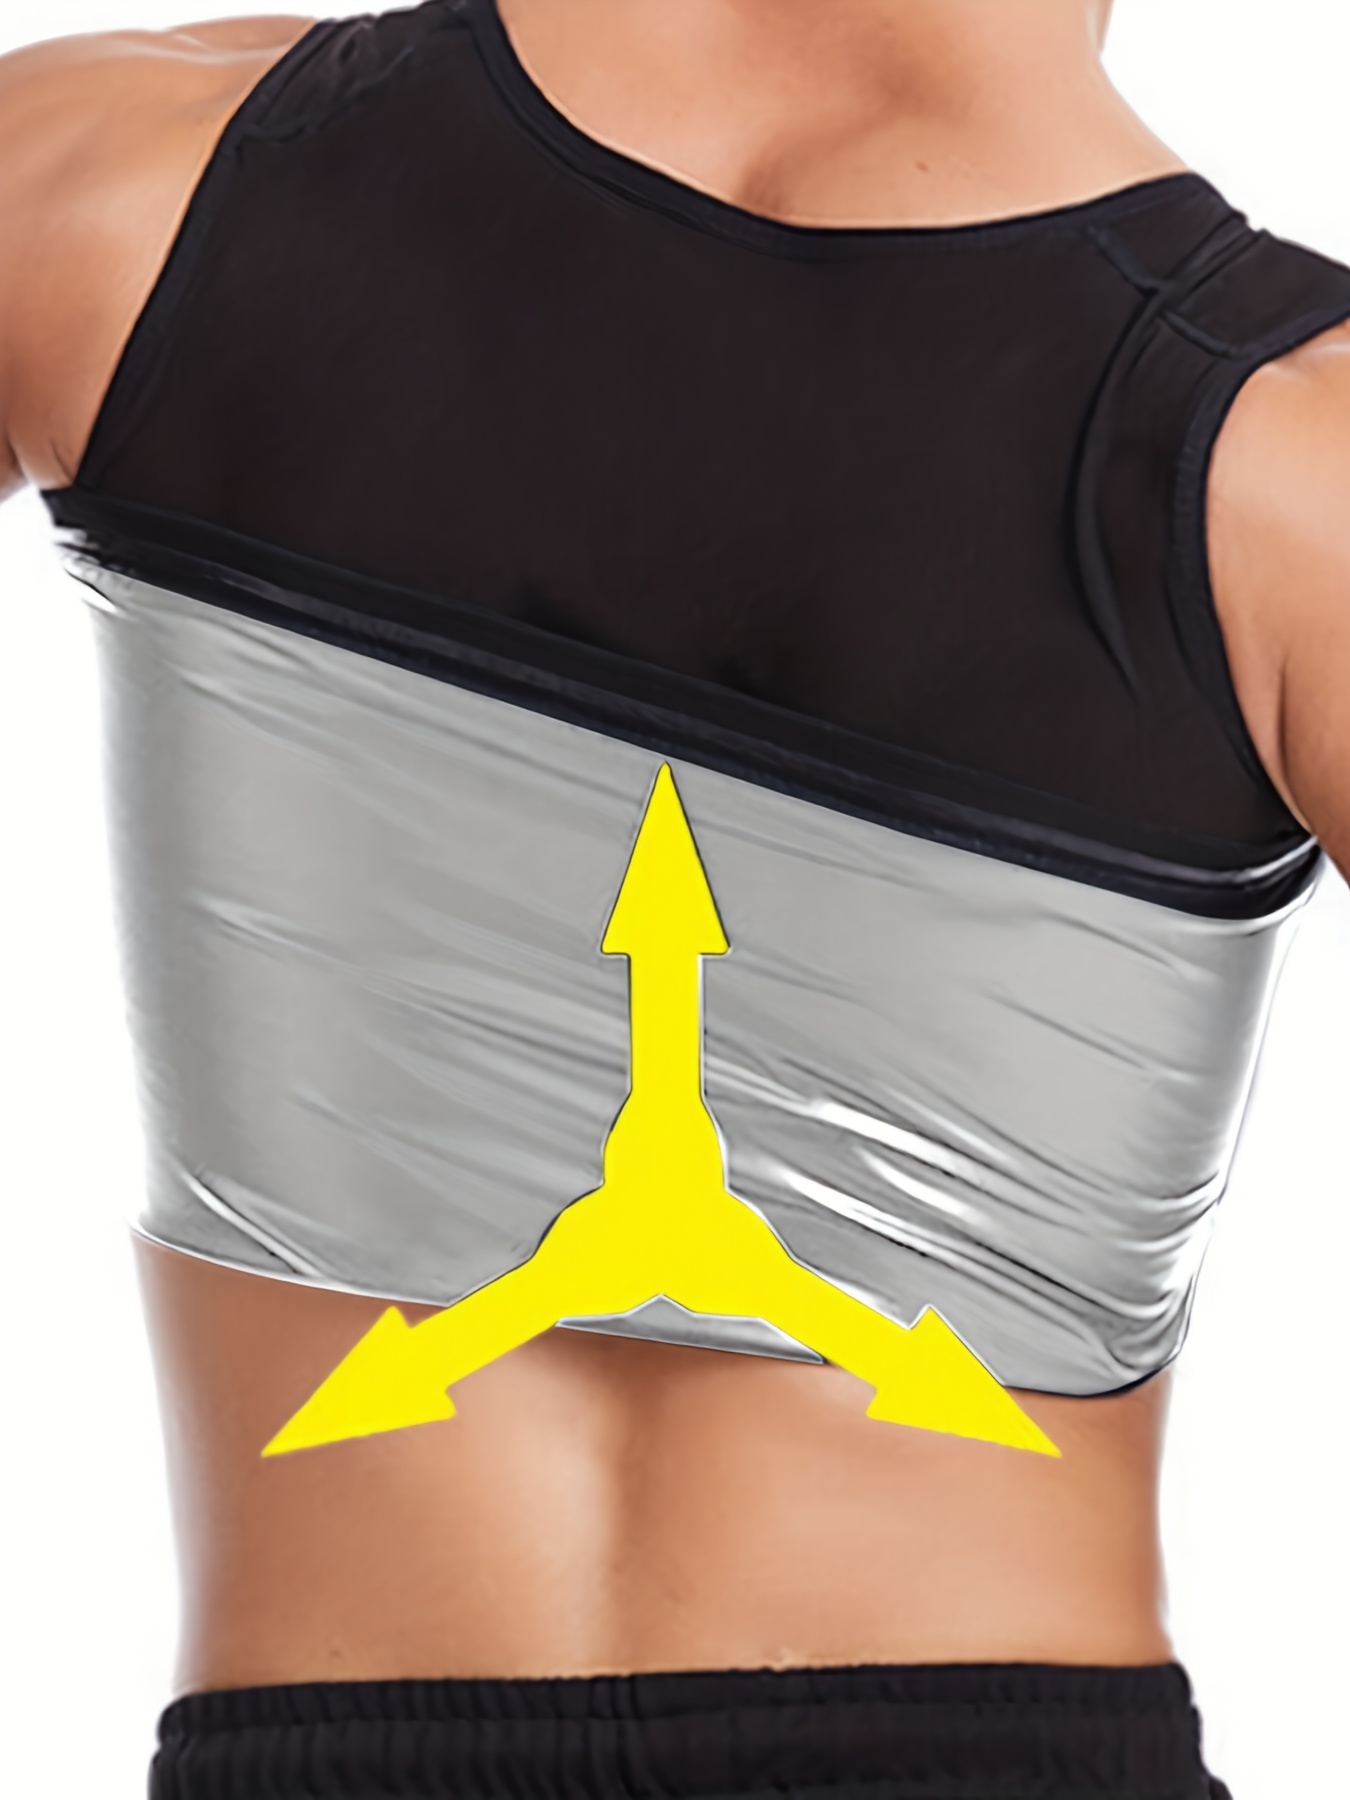 Polyester Spandex Men''s Sweat Vest Body Shaper Slimming Tank Top